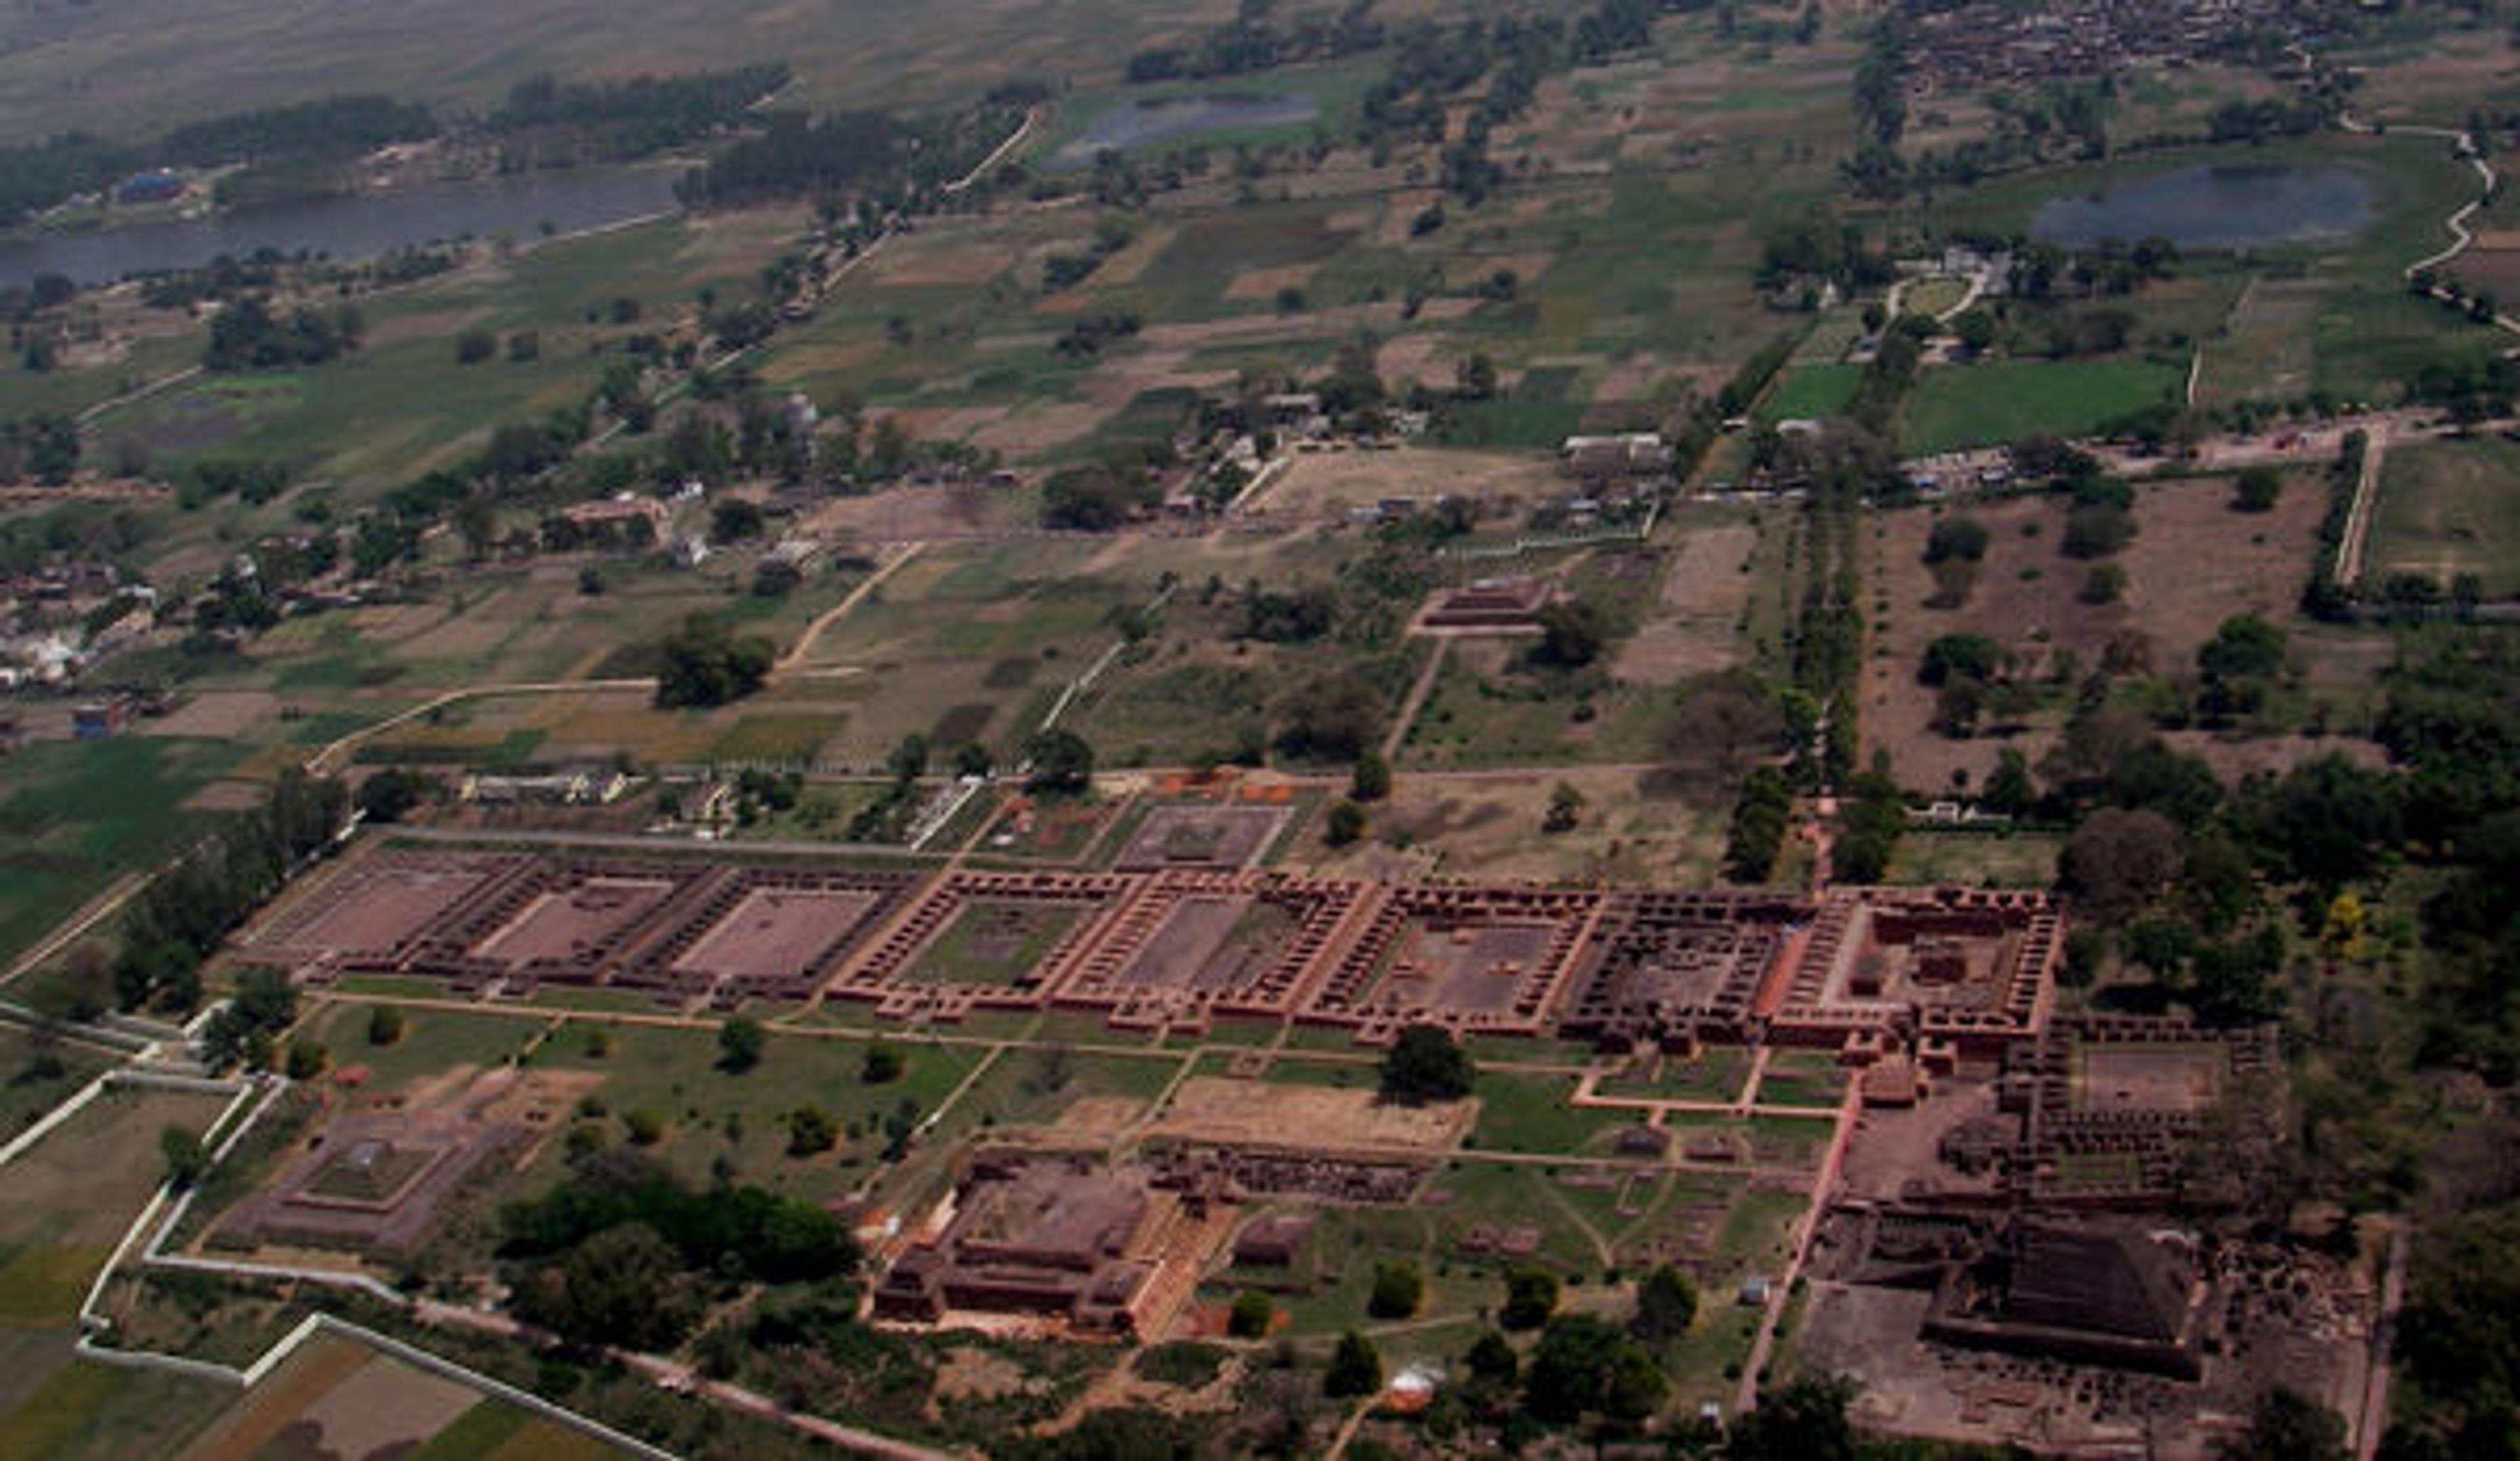 Monastic University of Nalanda, Kite photo courtesy of Yves Guichand